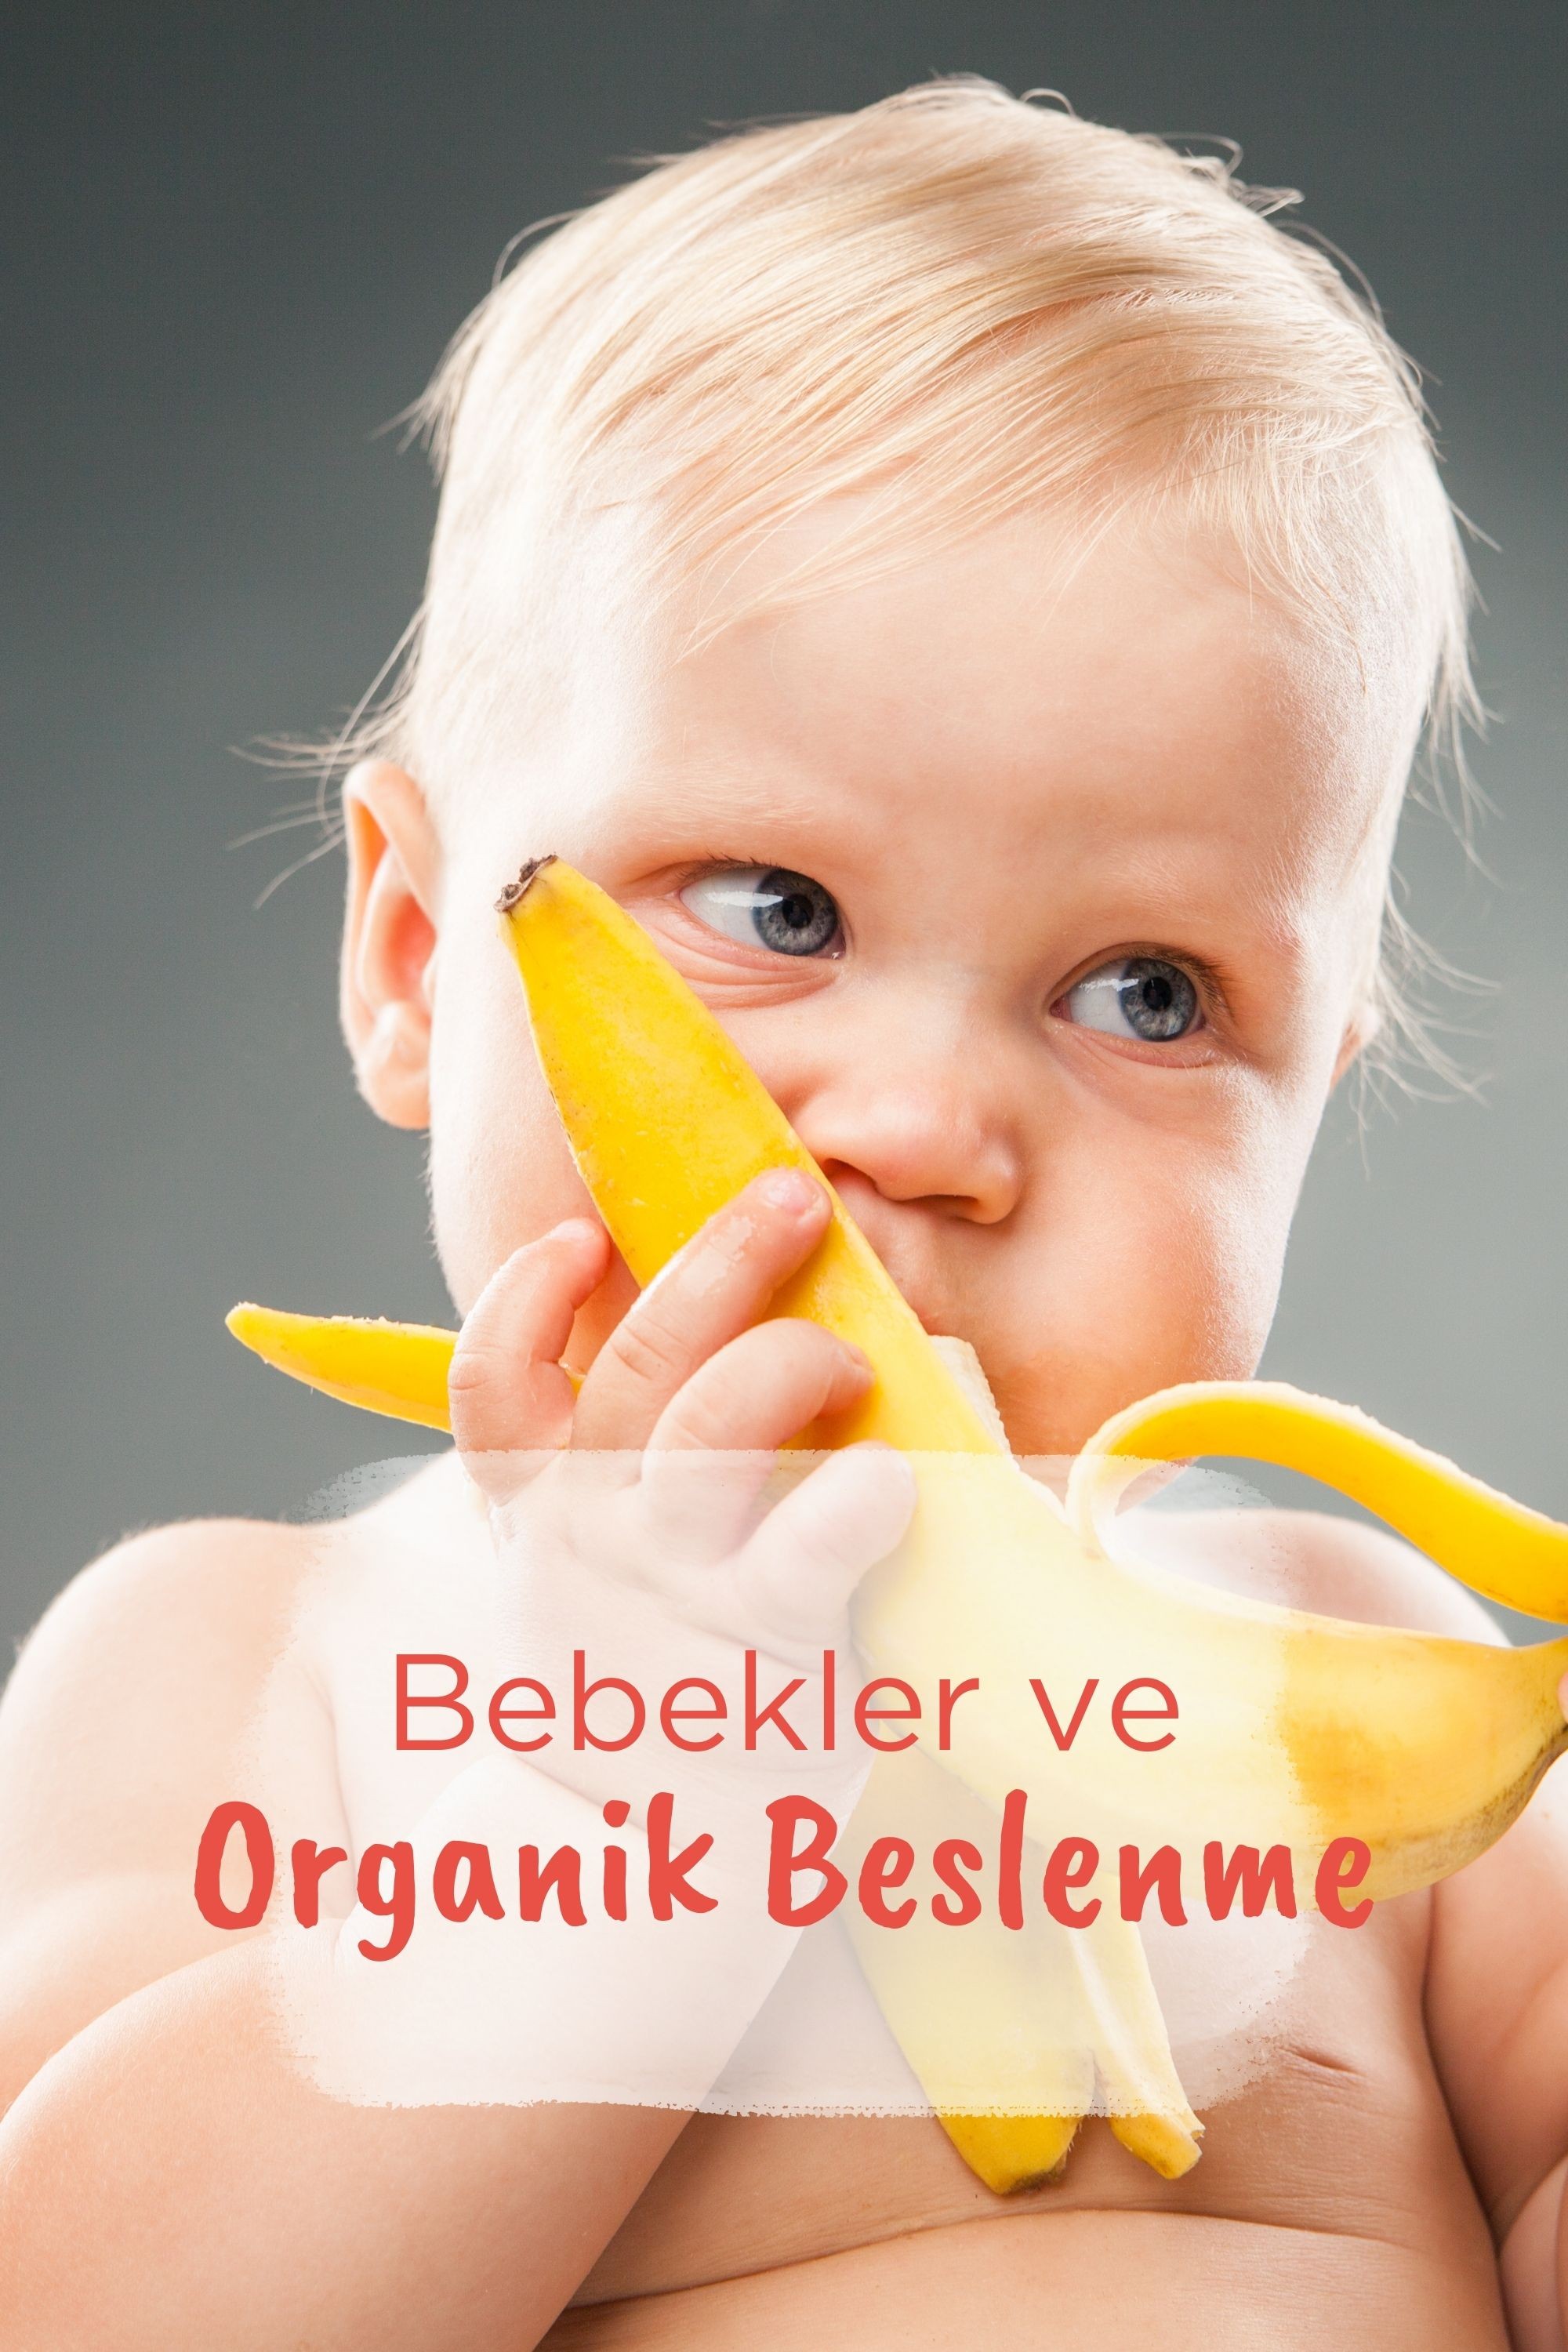 Bebekler ve Organik Beslenme